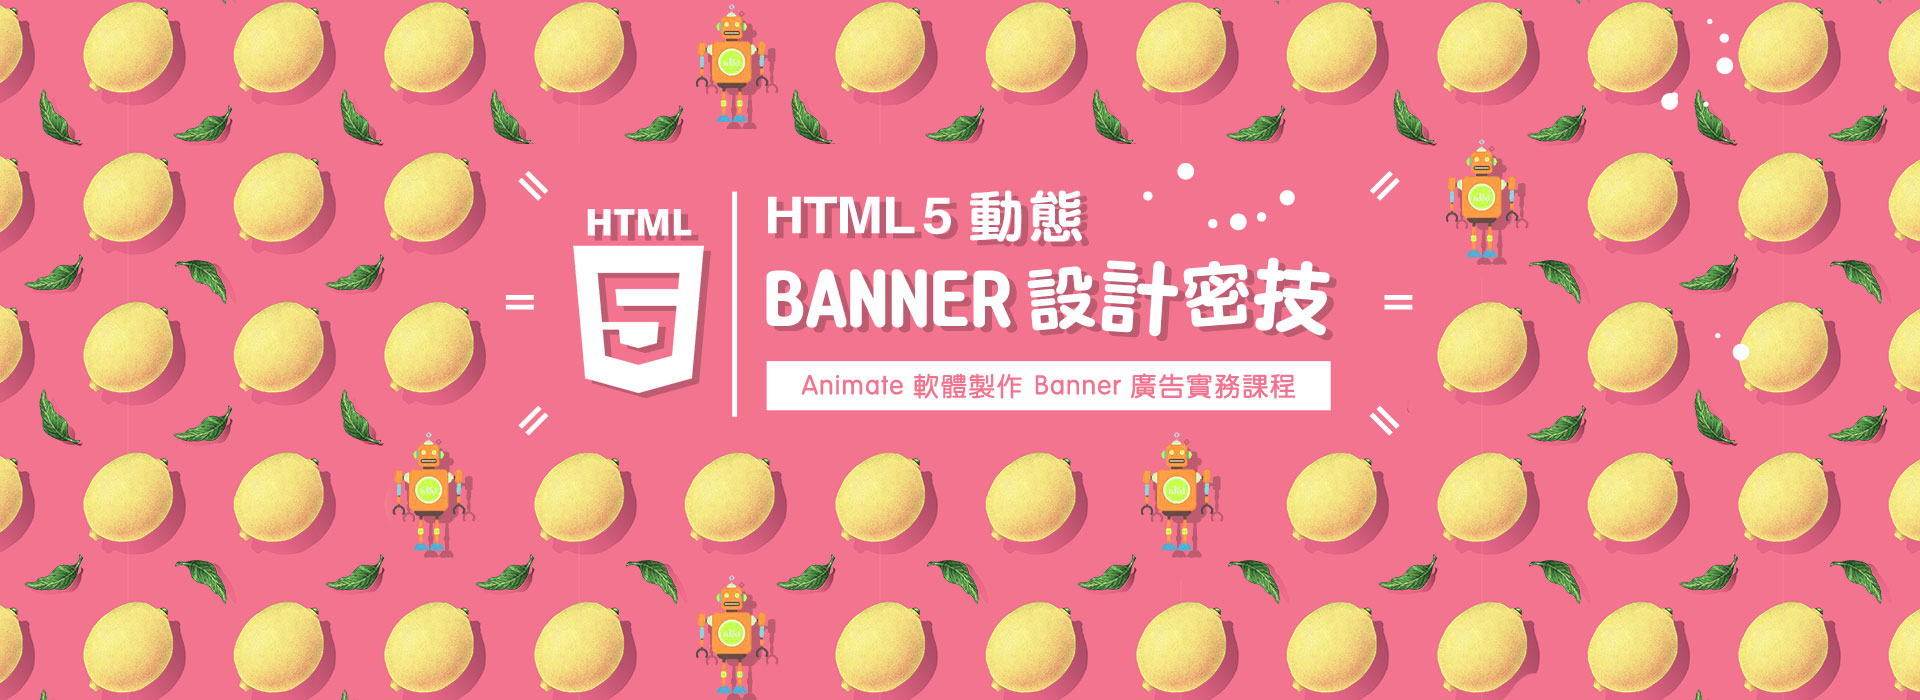 HTML5 動態Banner設計密技